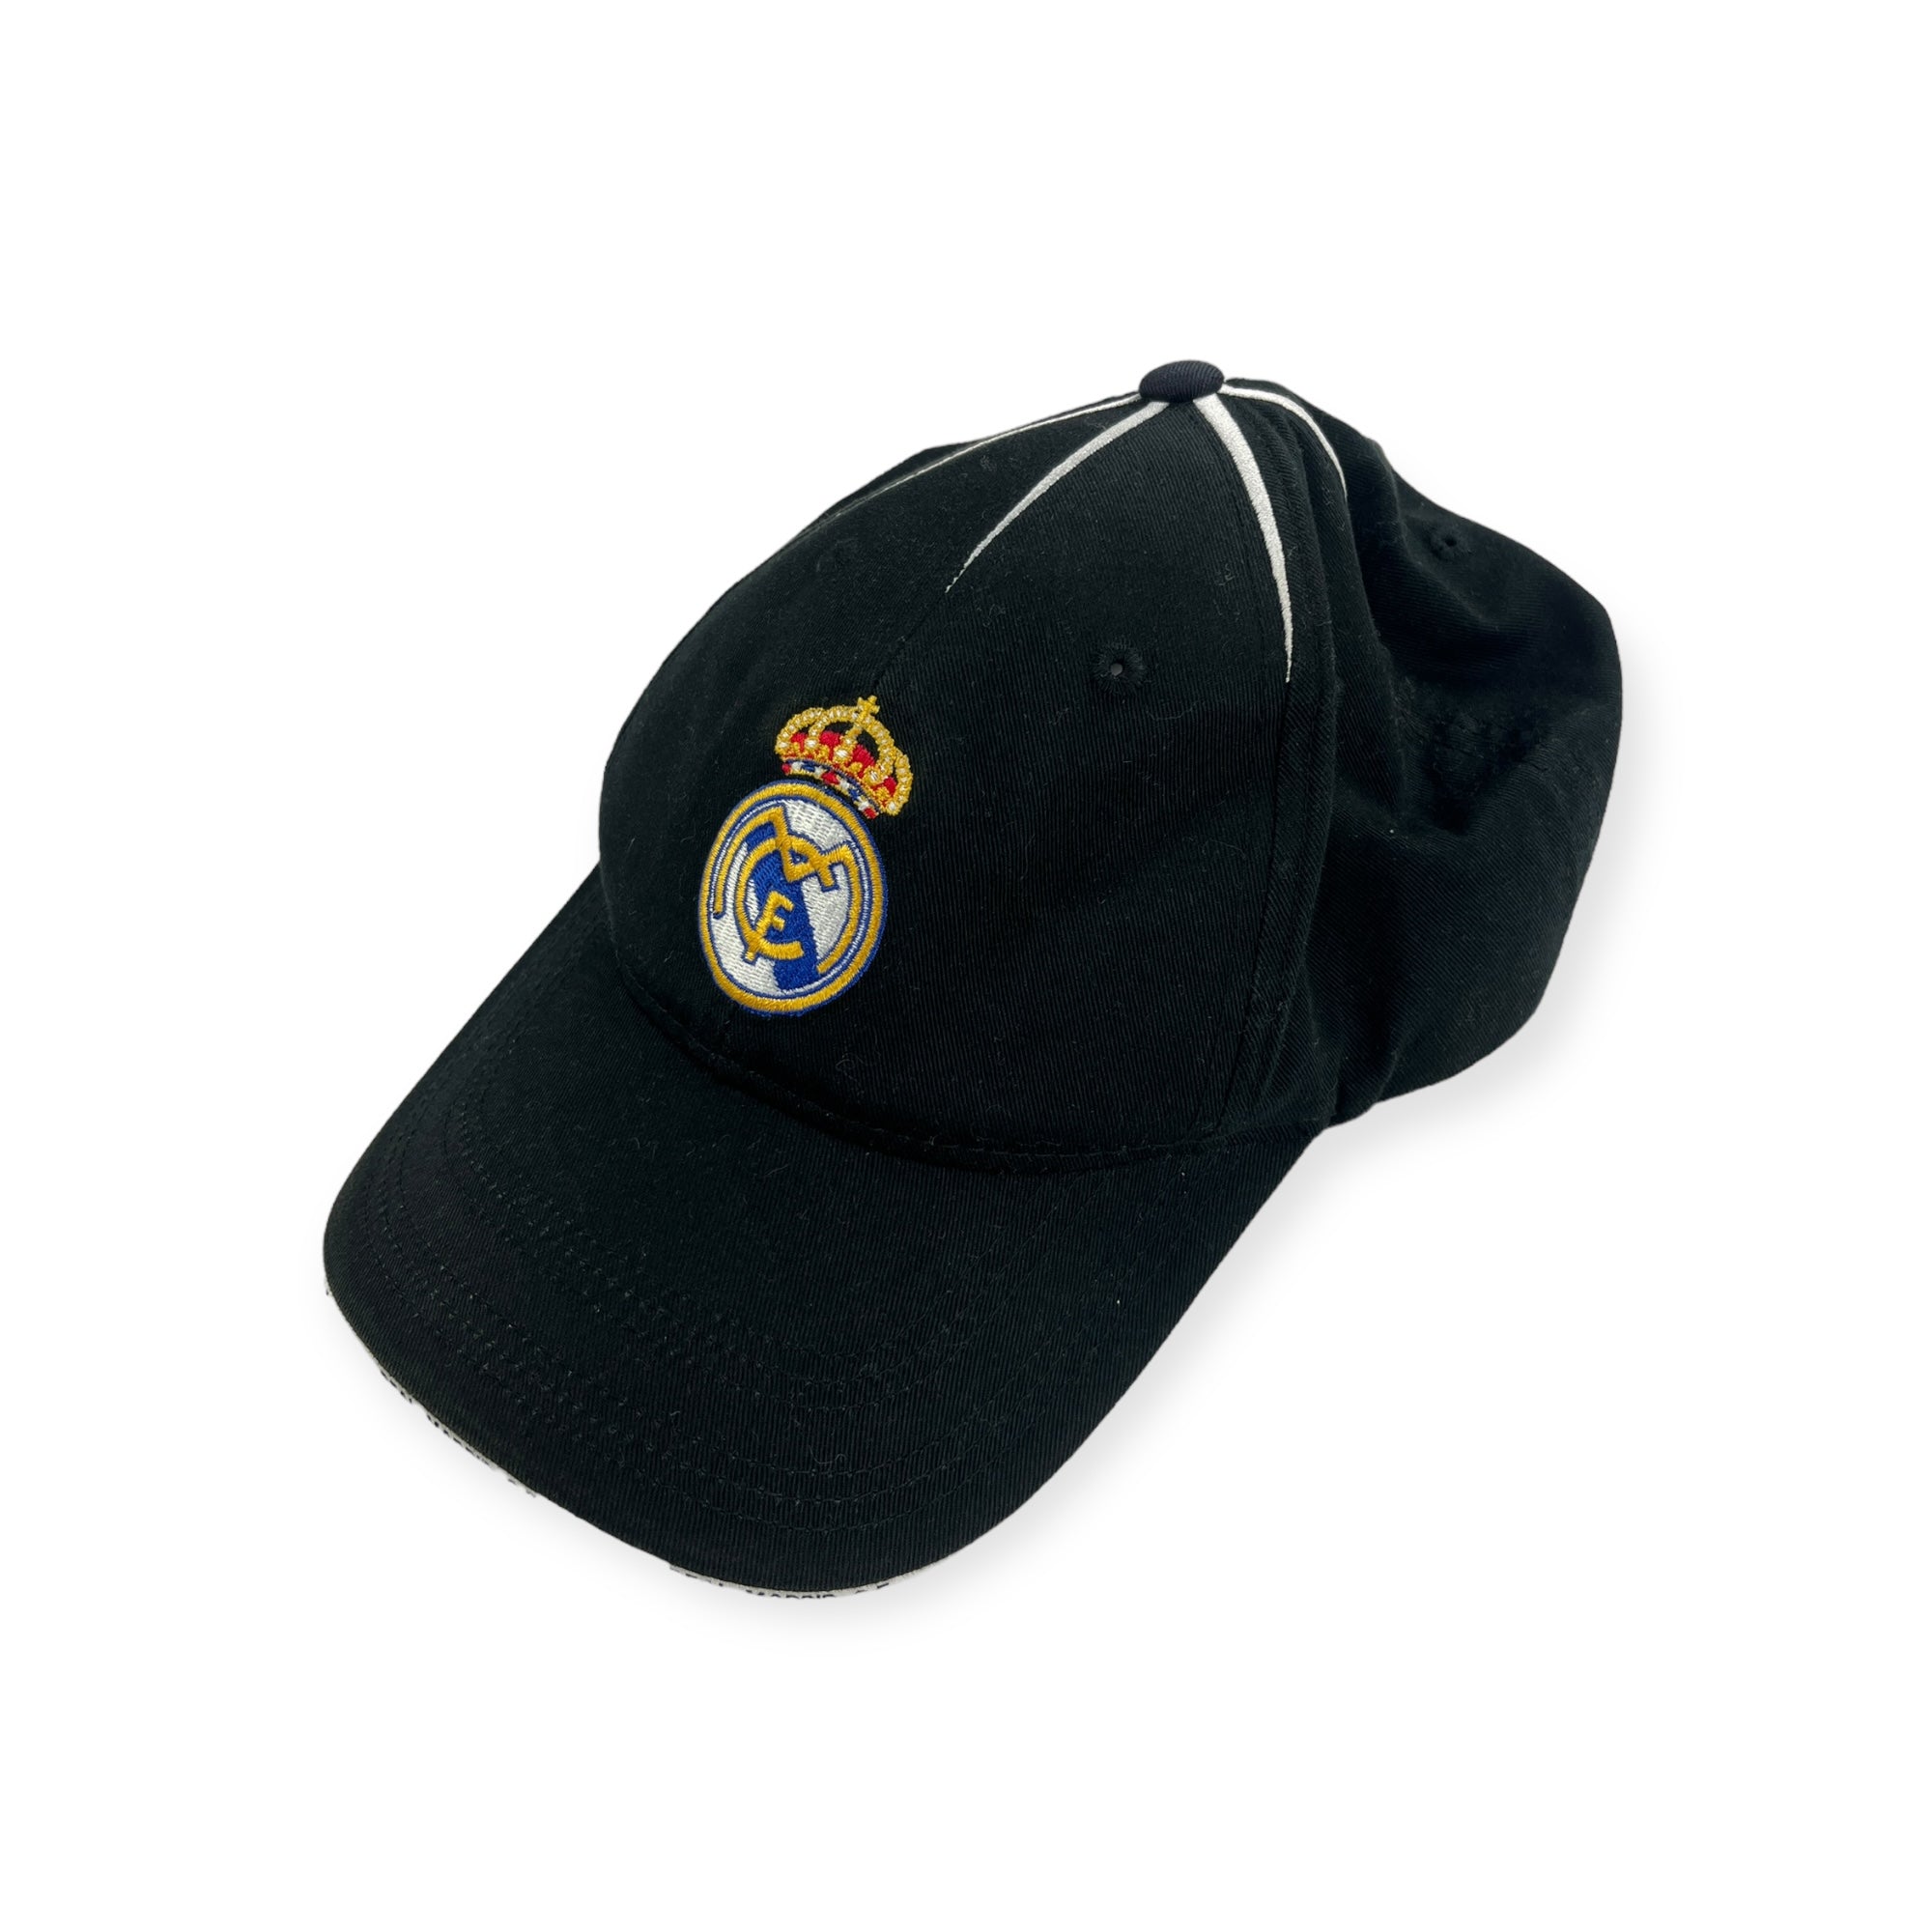 Real Madrid Adidas Cap